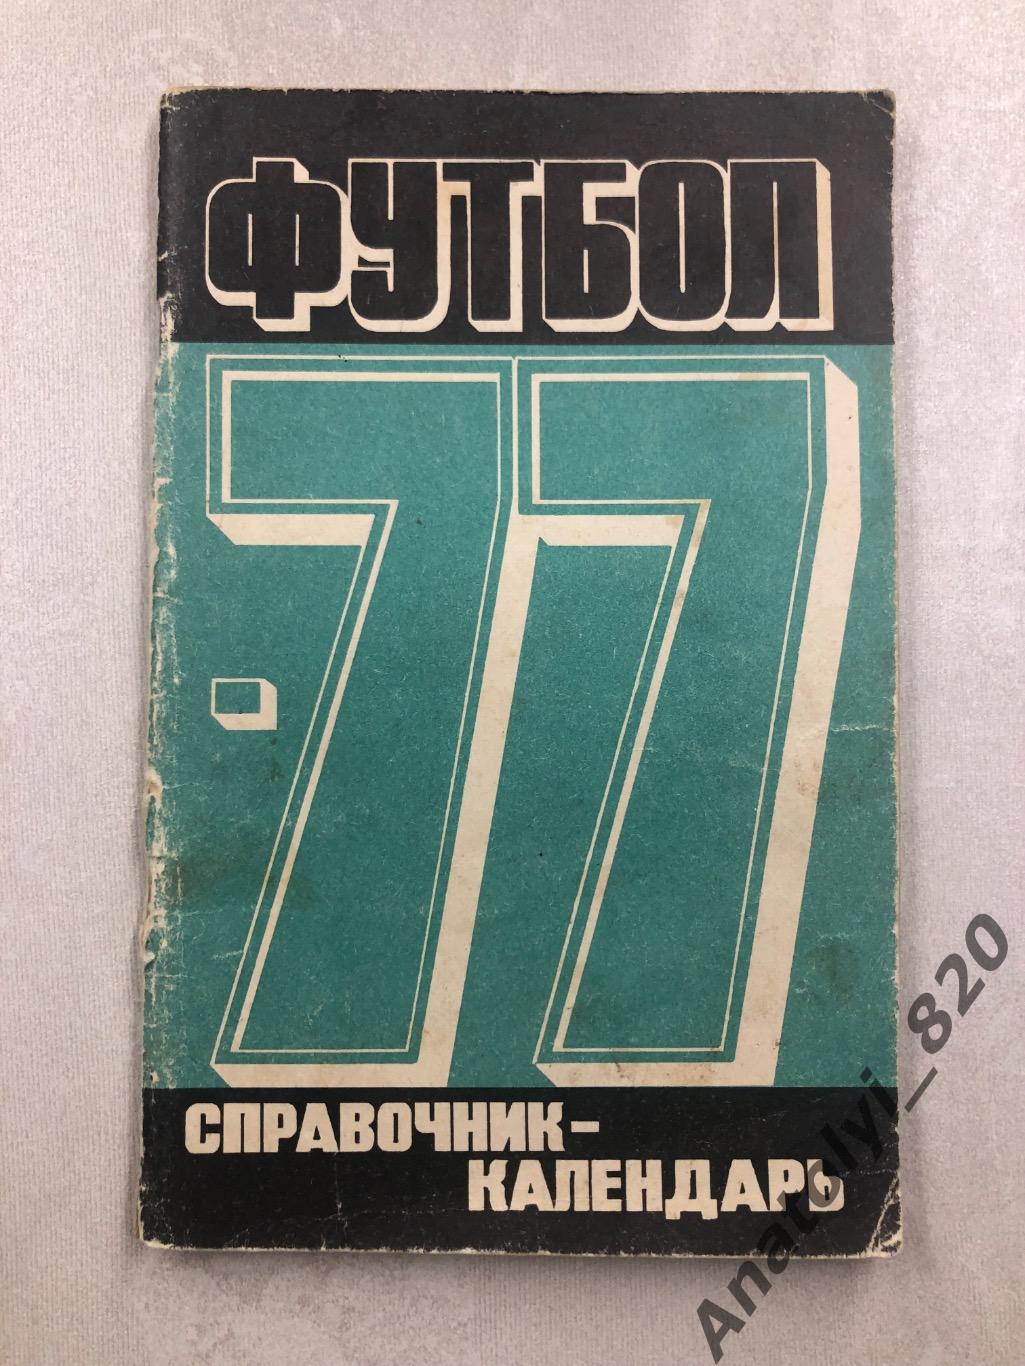 Москва 1977 год, календарь - справочник